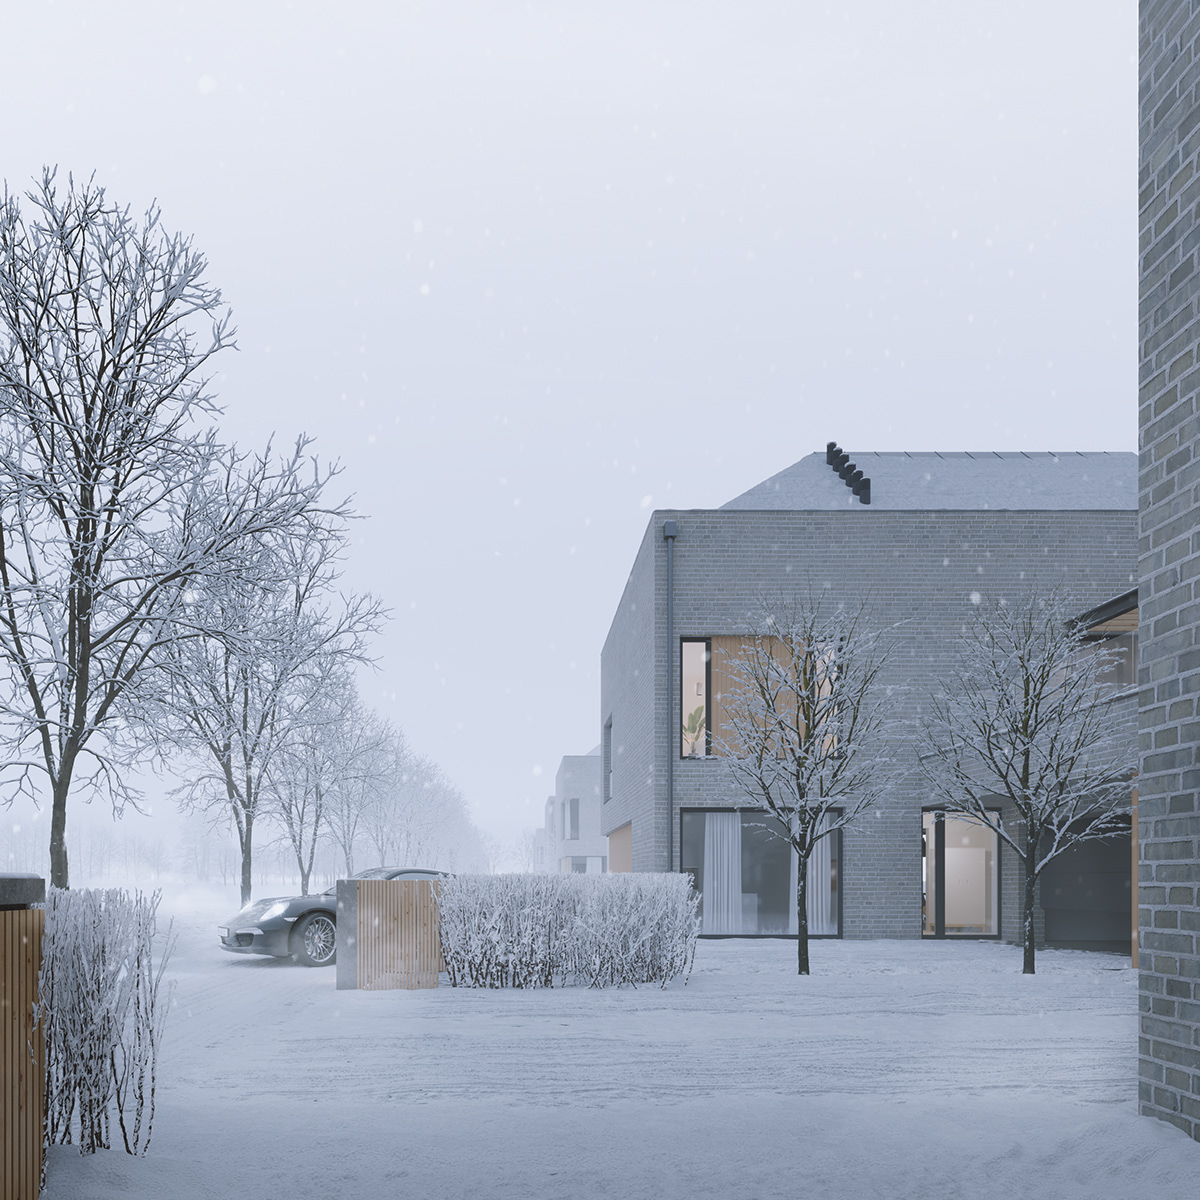 3D architecture archviz CG CGI estate exterior rendering Villa visualization